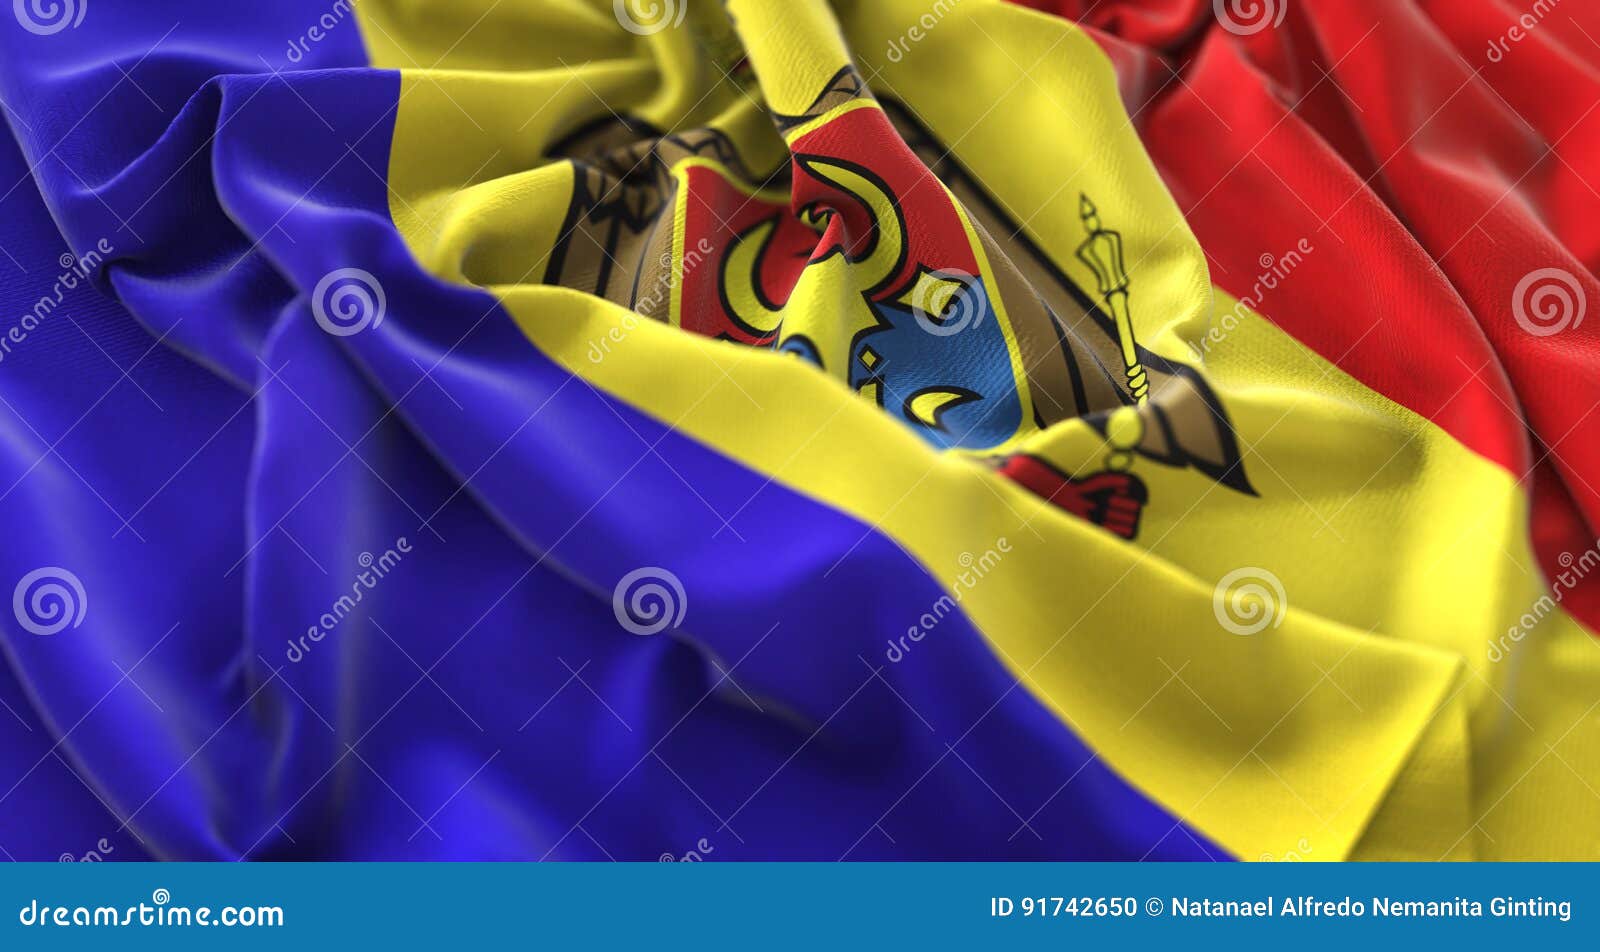 moldova flag ruffled beautifully waving macro close-up shot